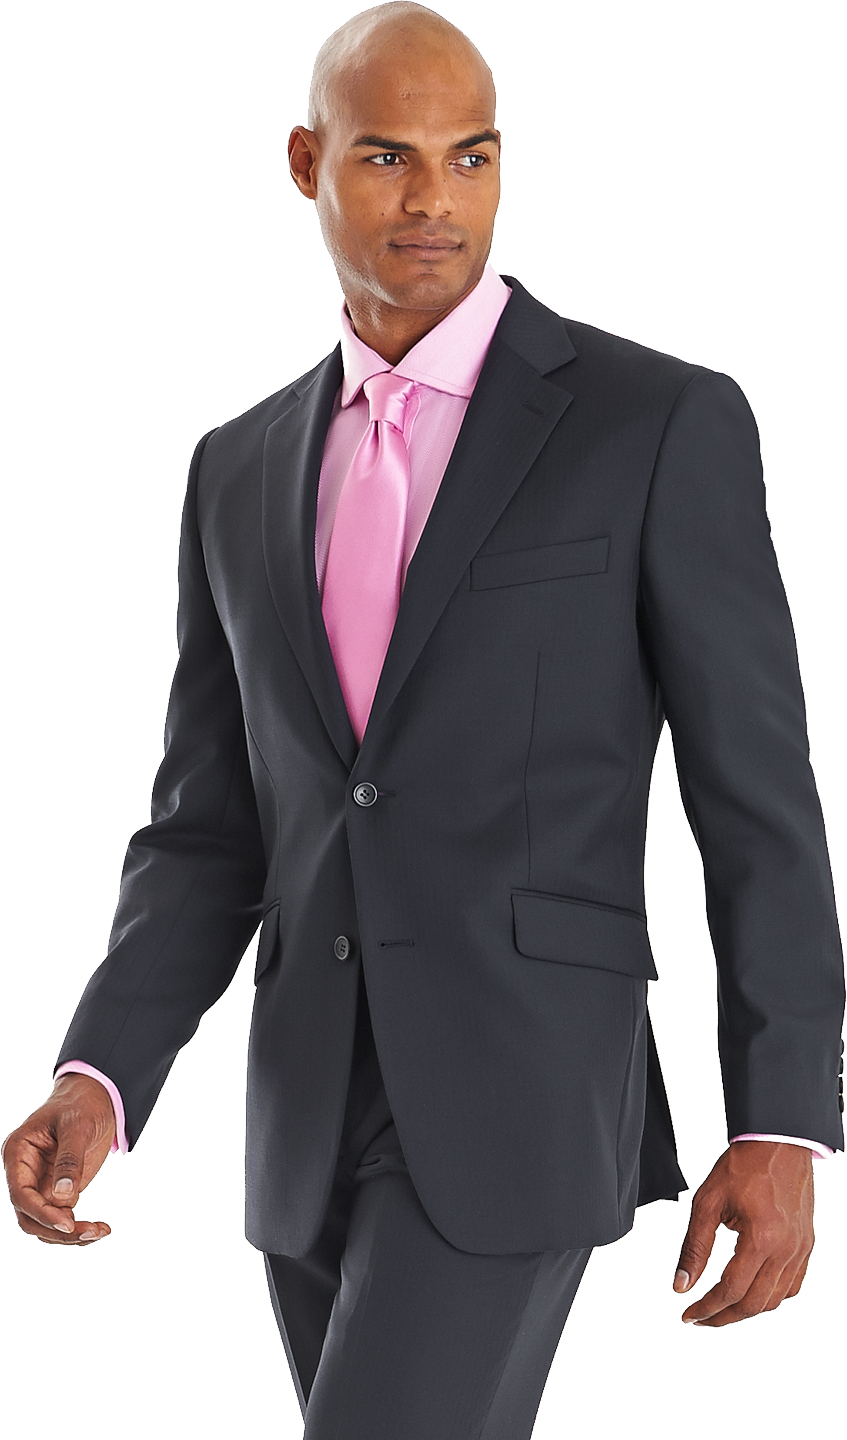 Black Suit Pink Tie PNG Image